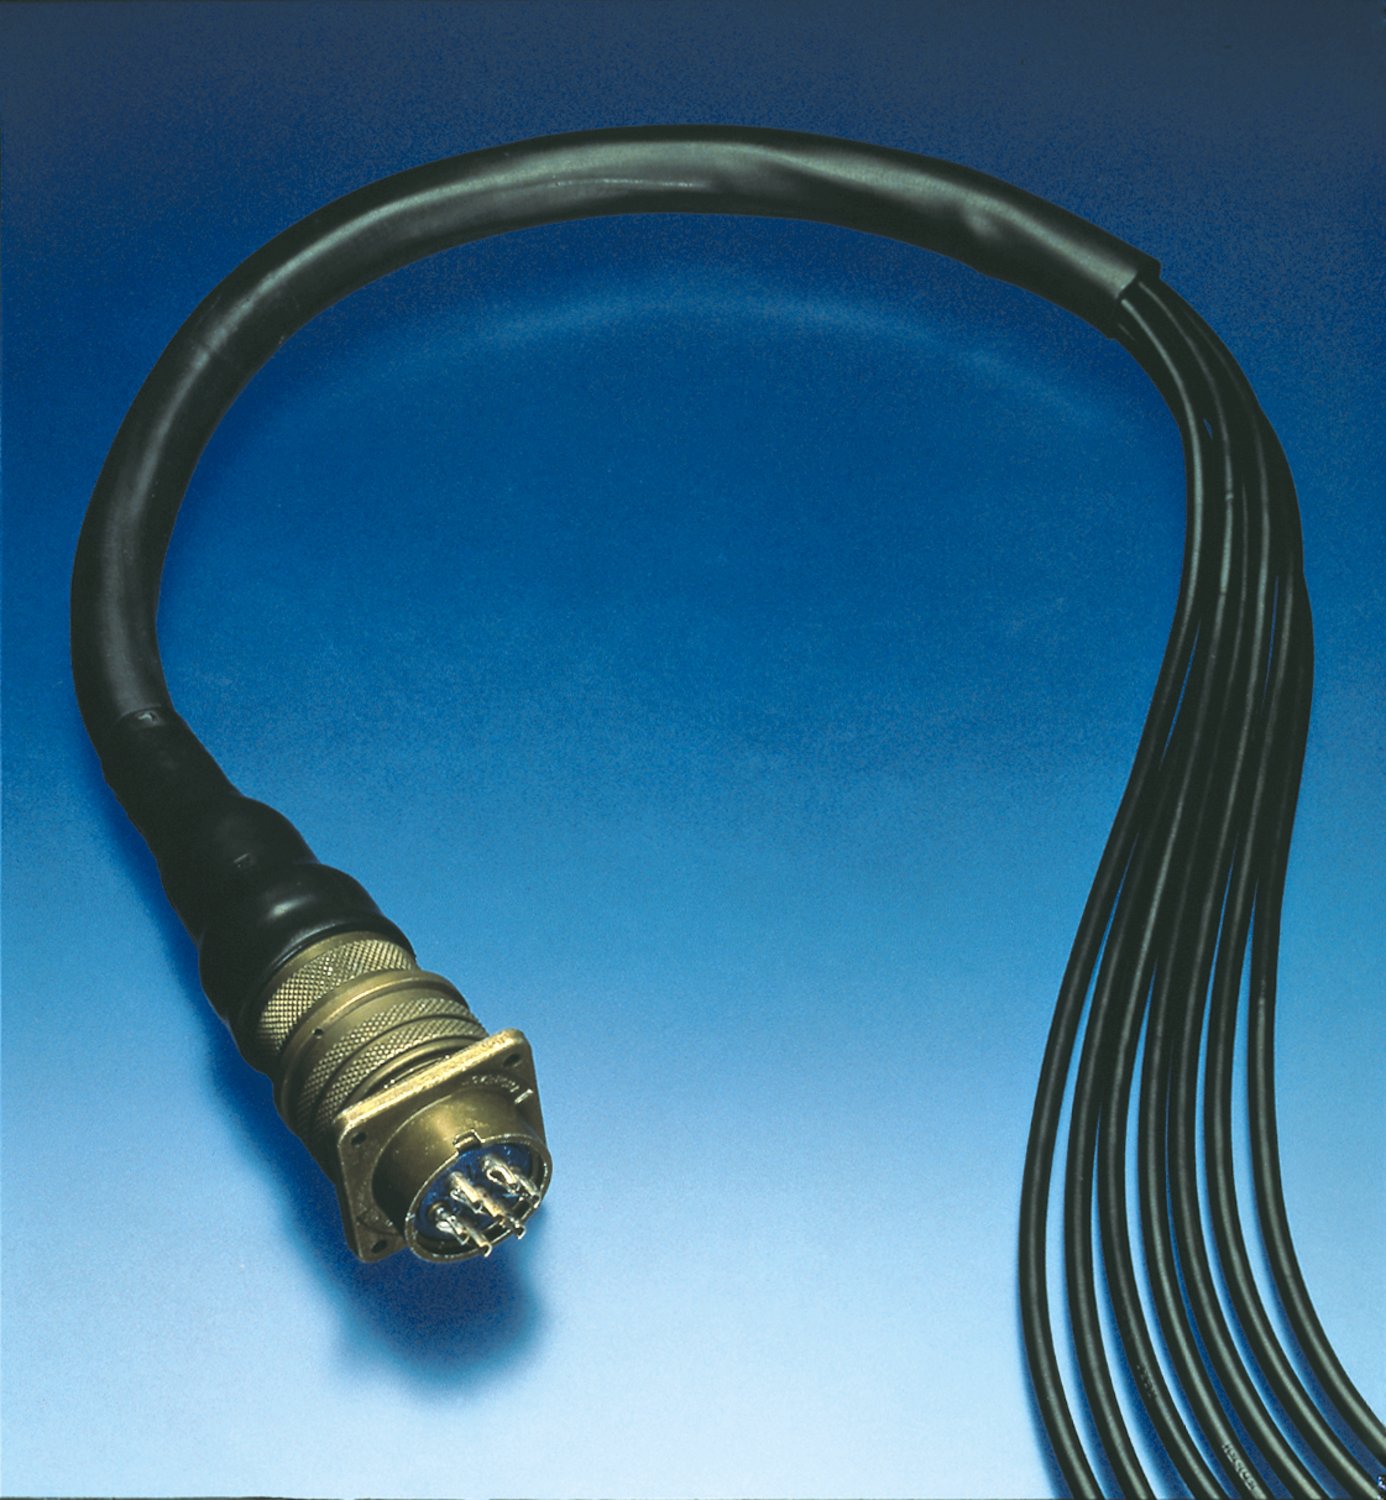 7010349778 - 3M Modified Fluoroelastomer Tubing VTN-200-3/8-Black: 200 ft spool
length, 1 spool per carton, 1 Roll/Case